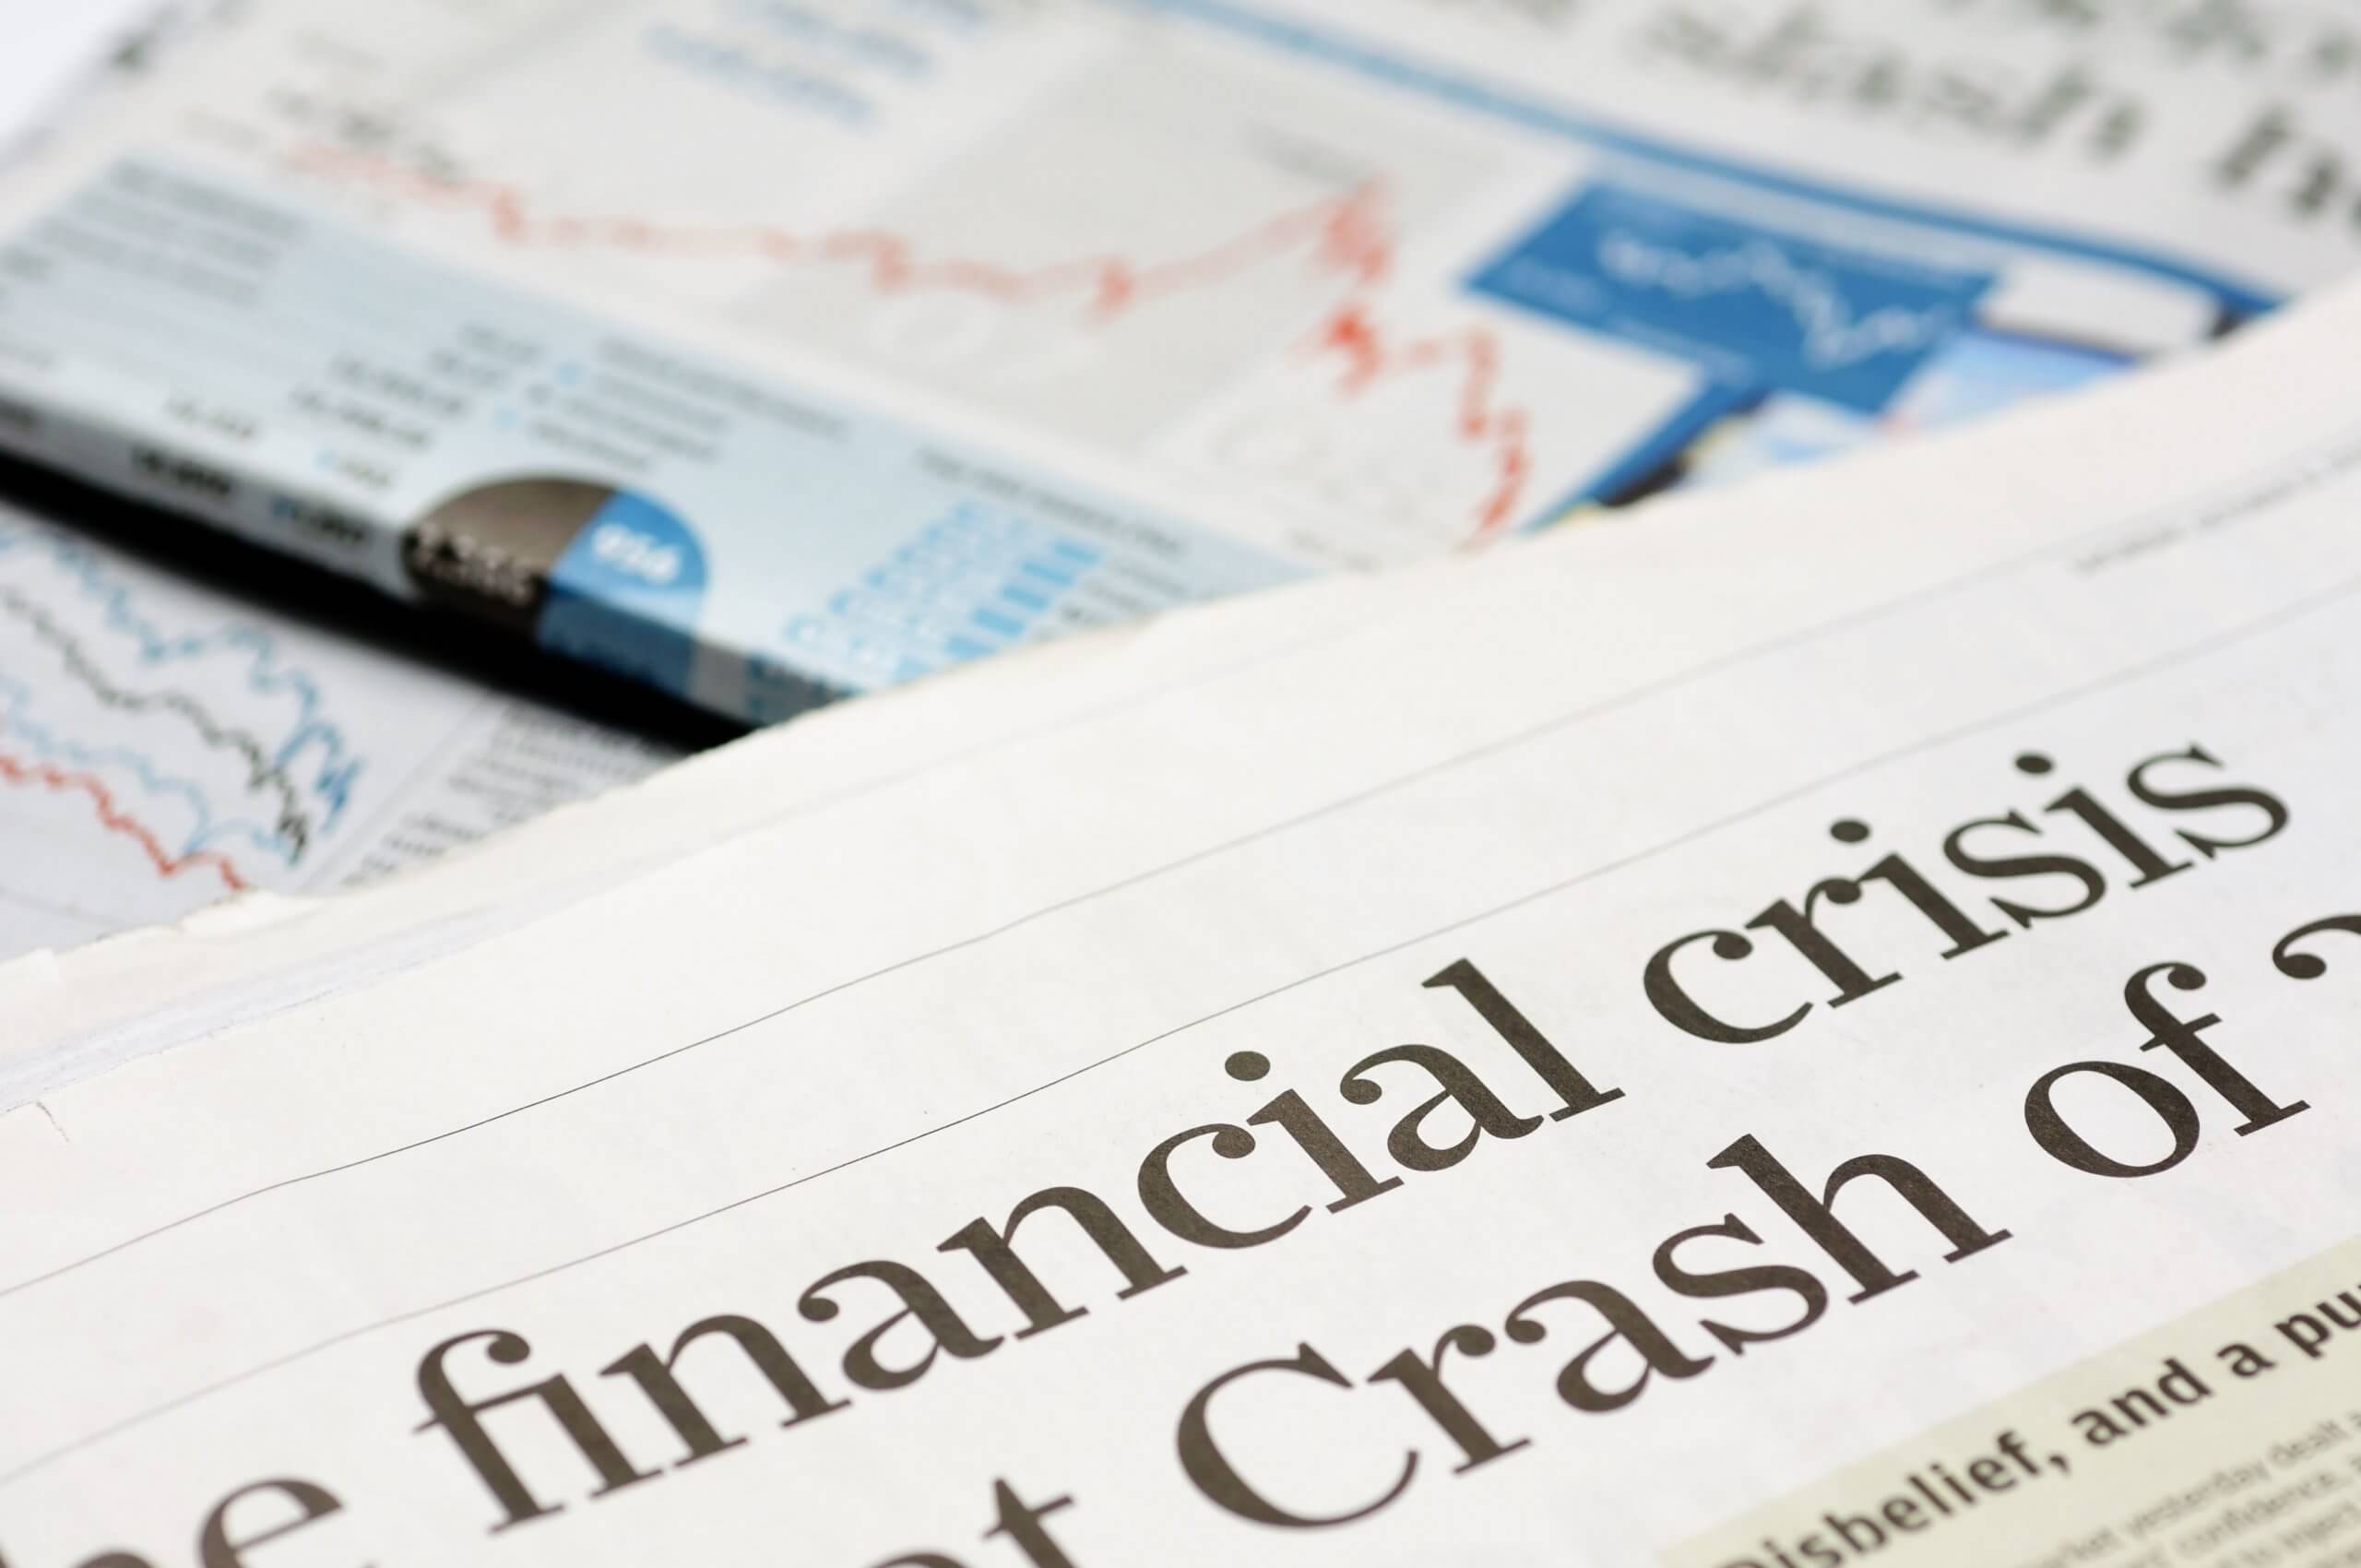 Newspaper headline of 2008 financial crash